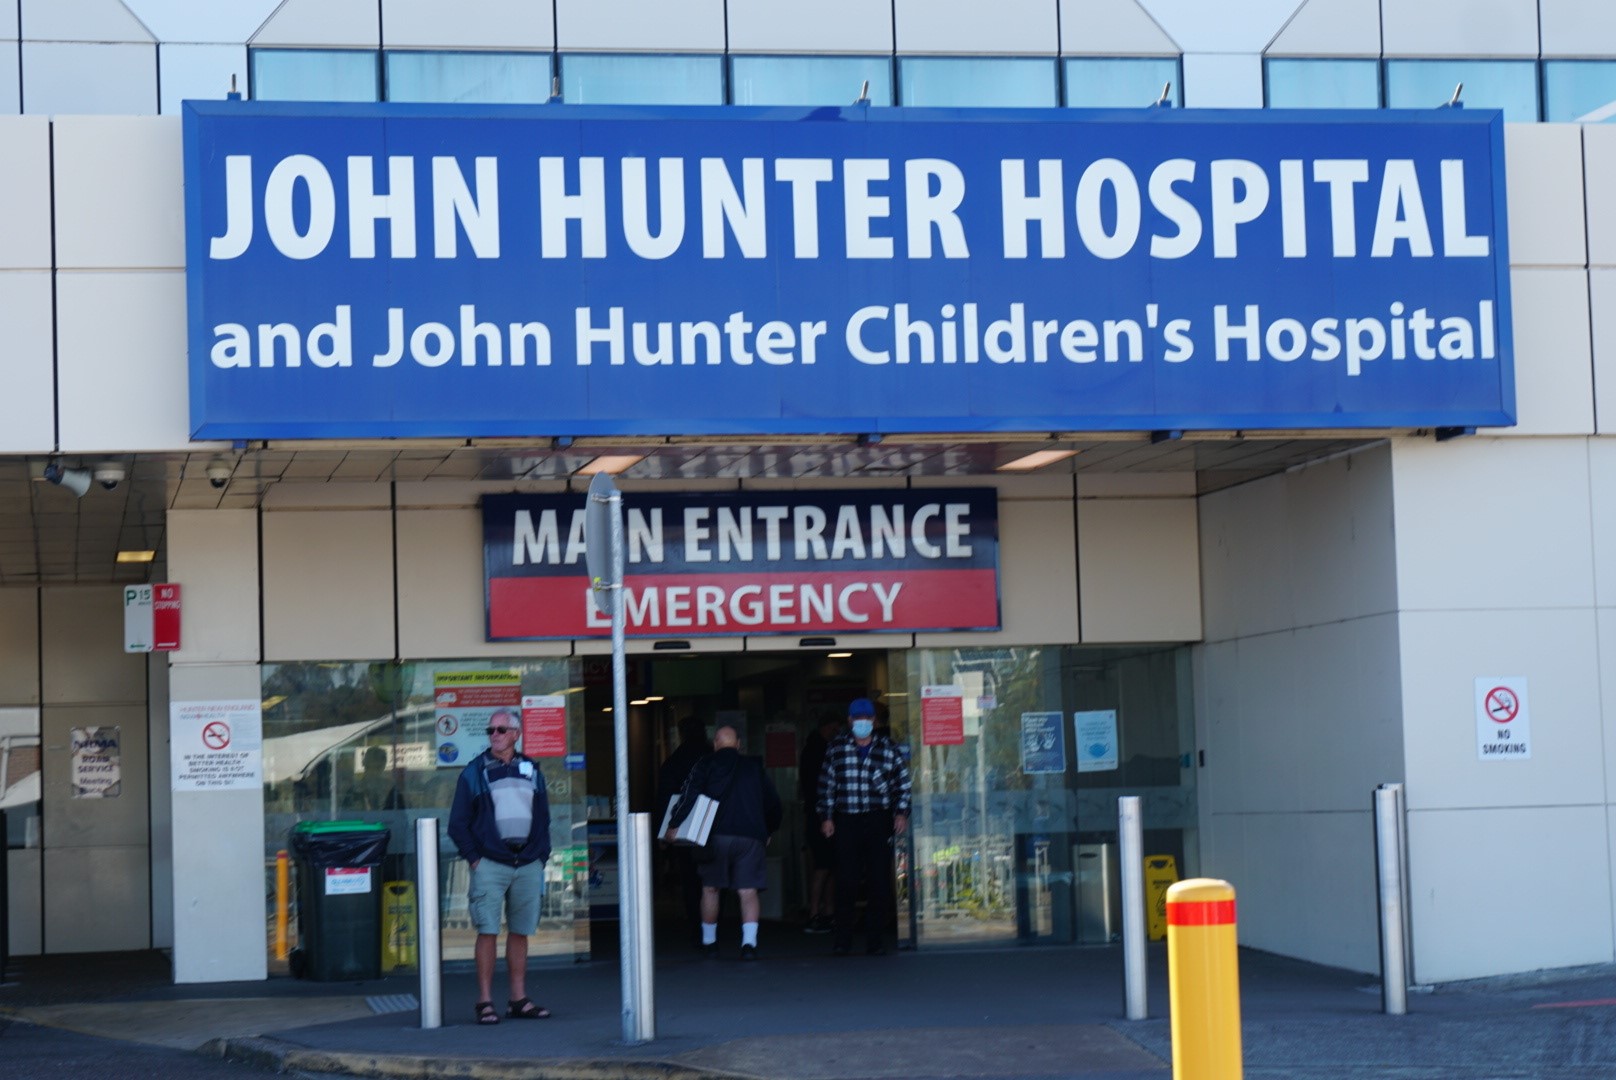 The John Hunter Hospital emergency entrance. 